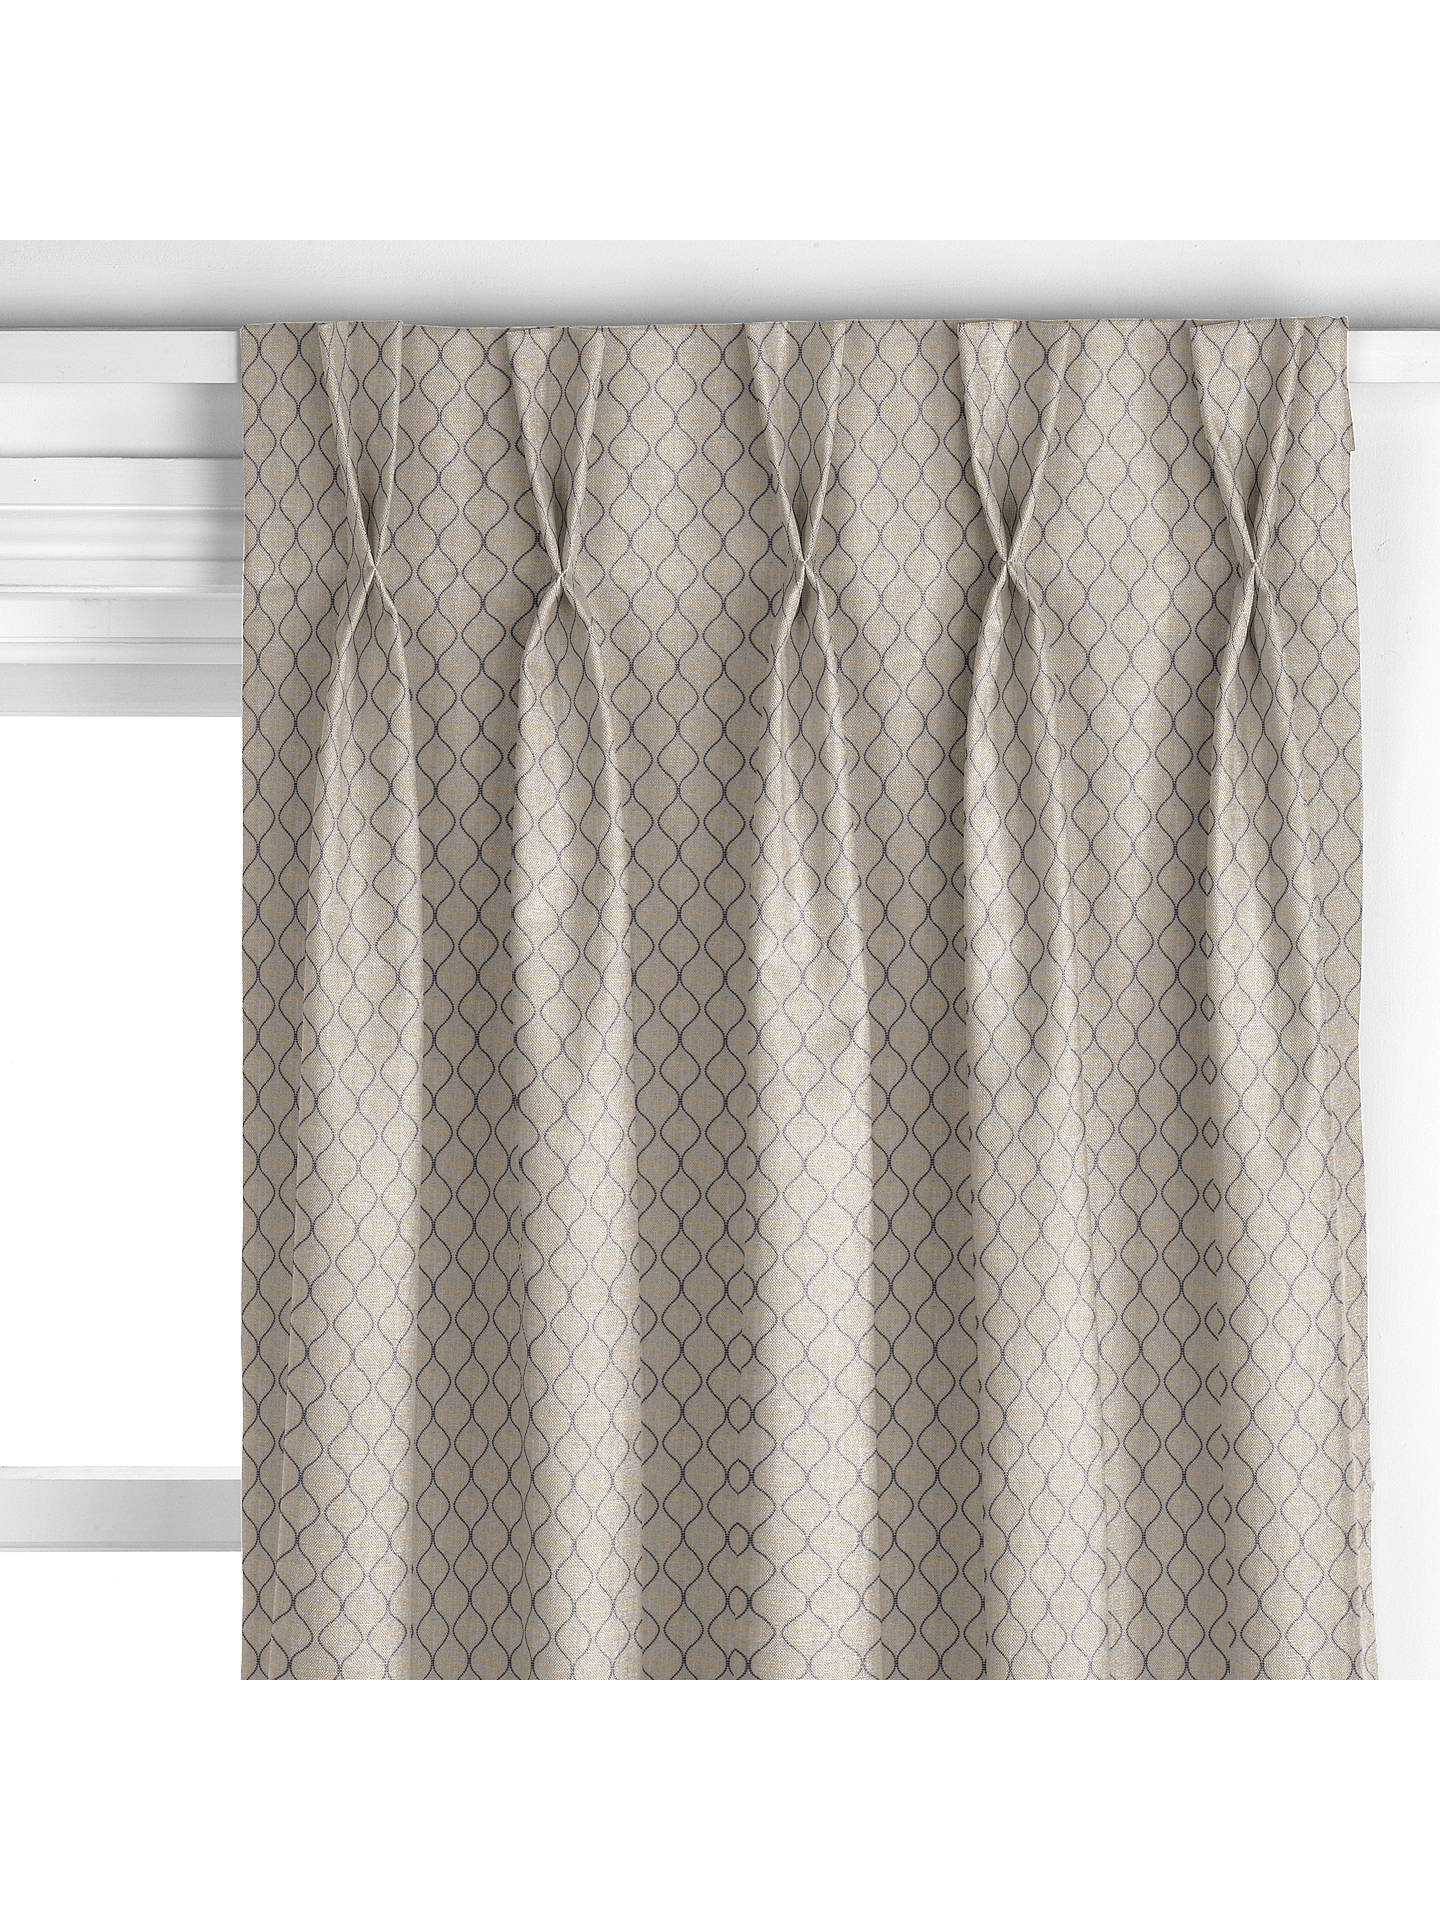 John Lewis & Partners Ellewood Knot Made to Measure Curtains, Denim